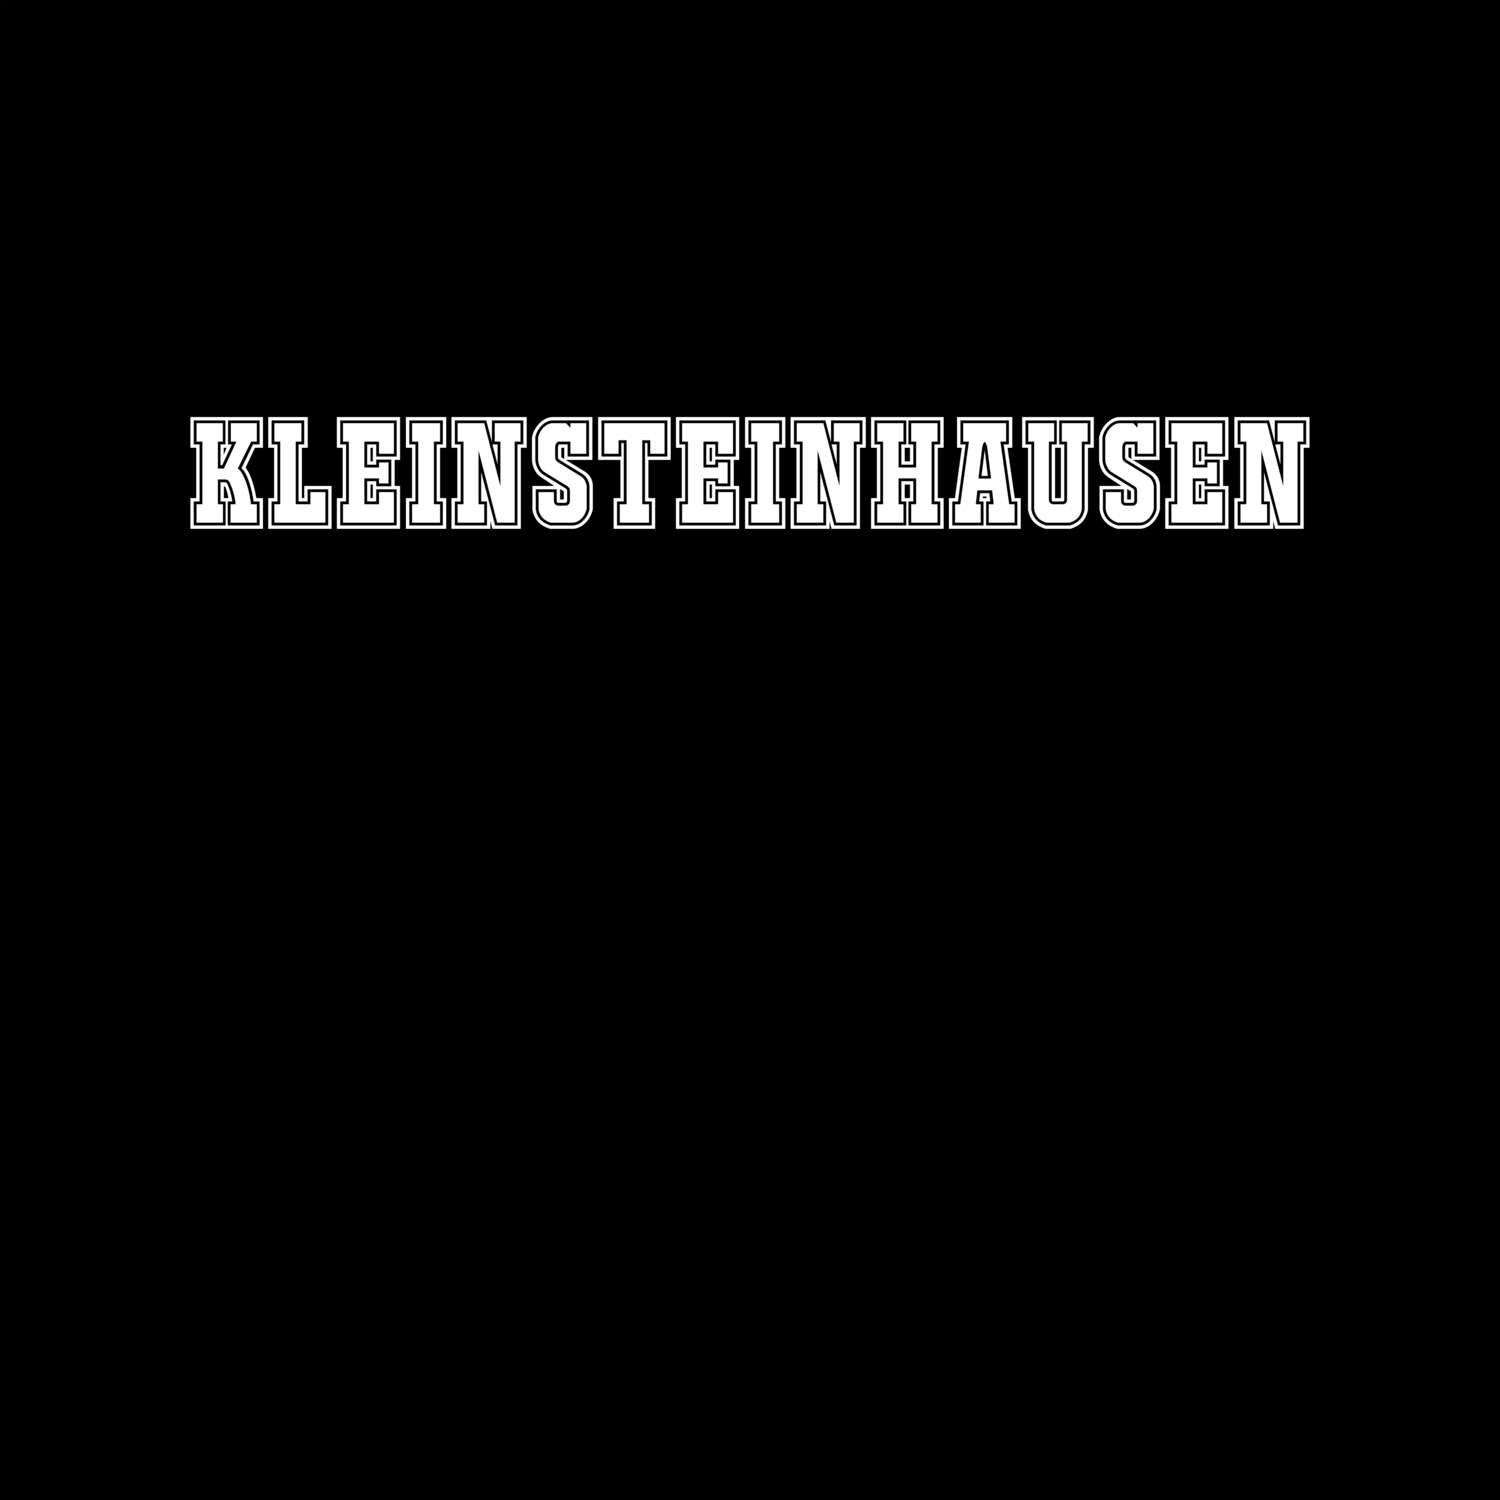 Kleinsteinhausen T-Shirt »Classic«